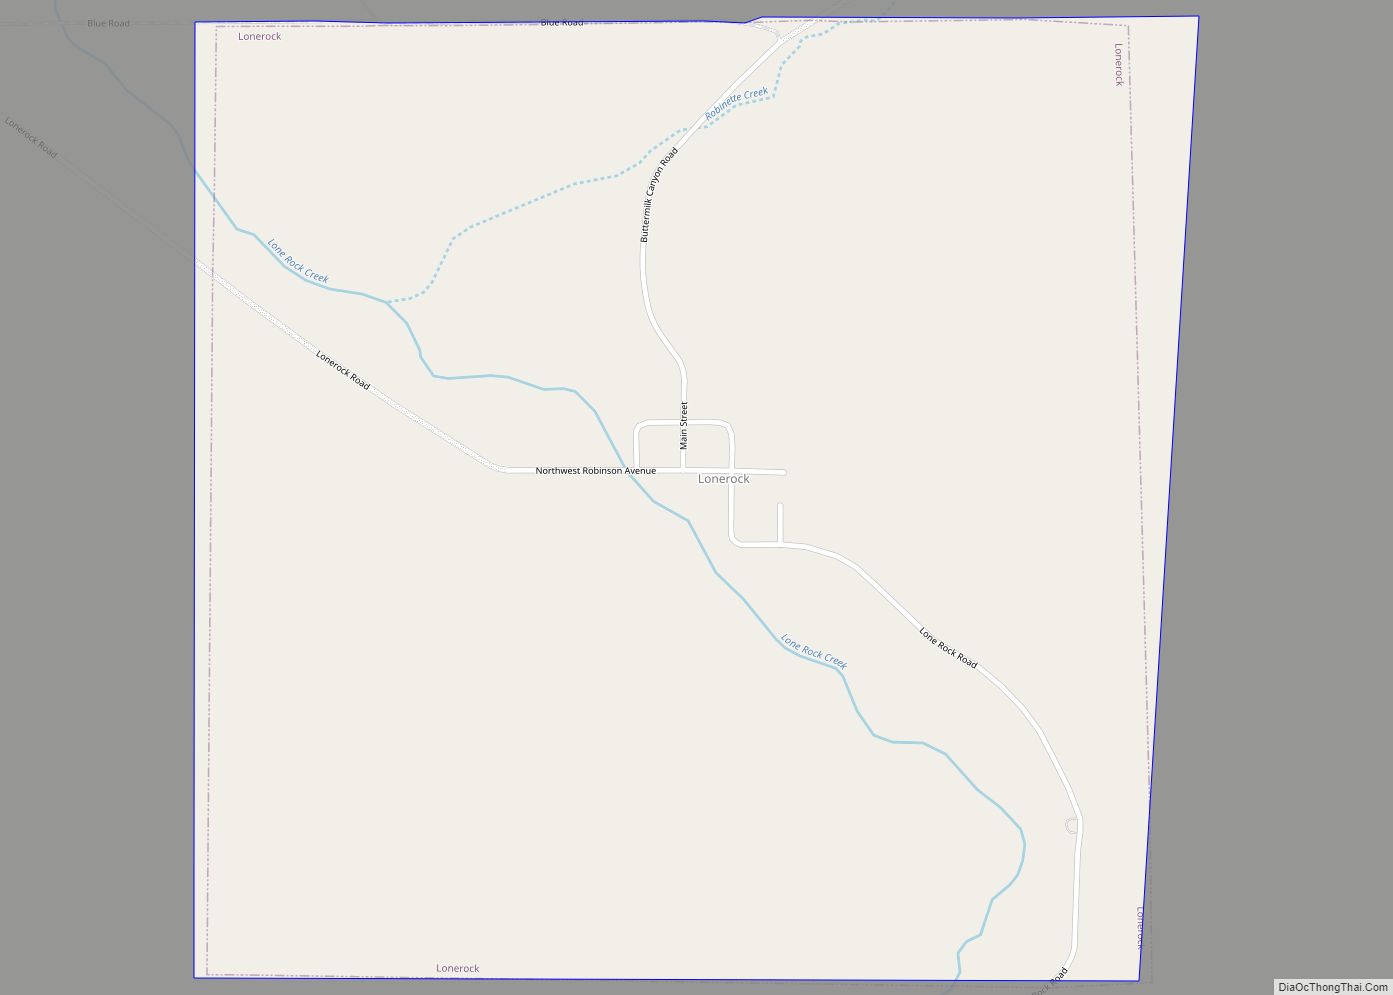 Map of Lonerock city